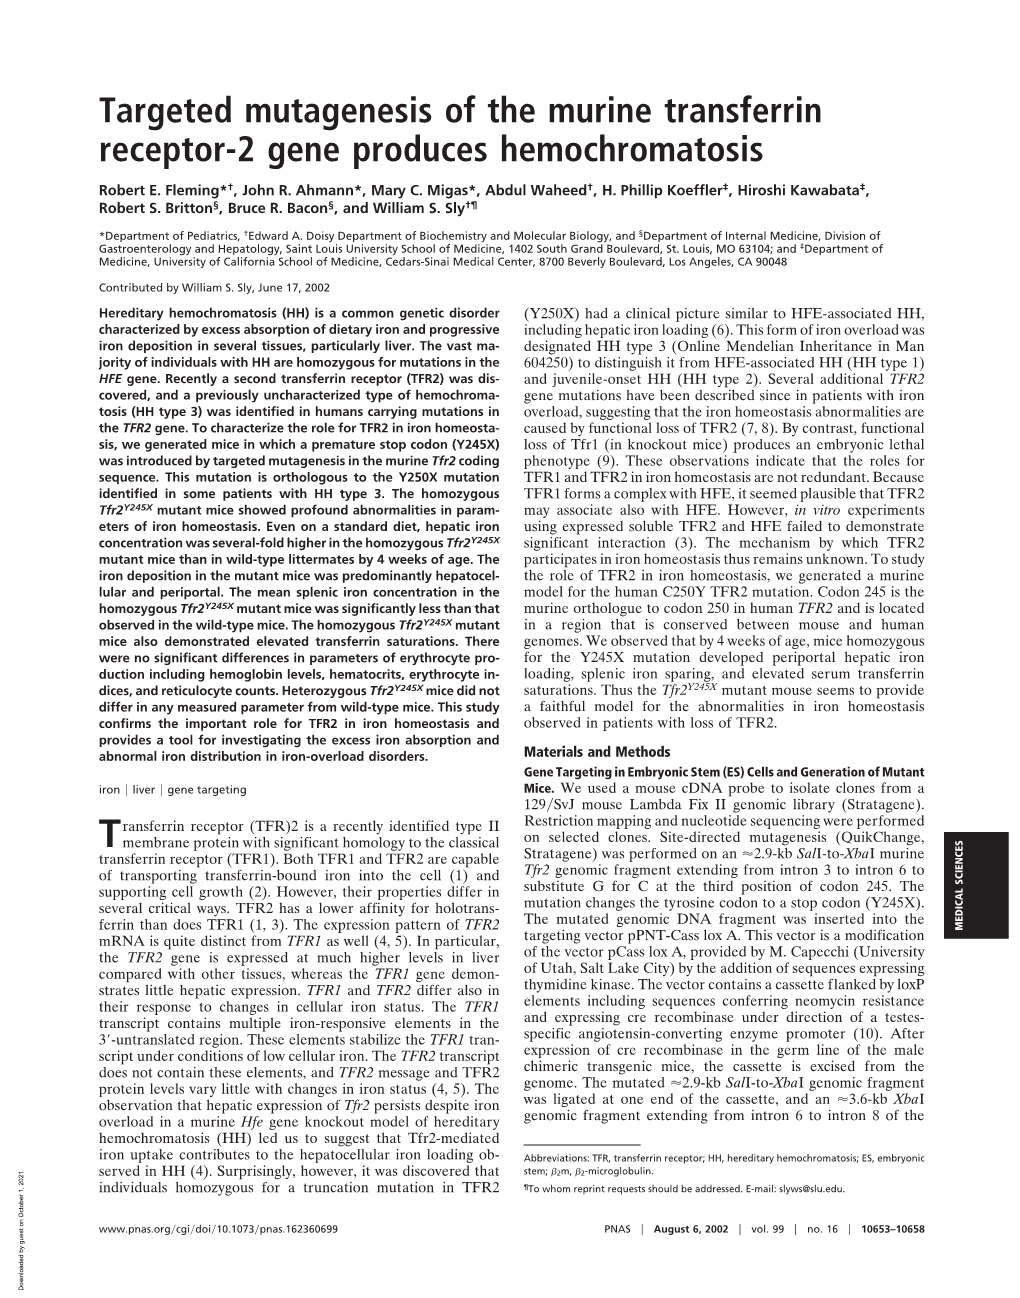 Targeted Mutagenesis of the Murine Transferrin Receptor-2 Gene Produces Hemochromatosis